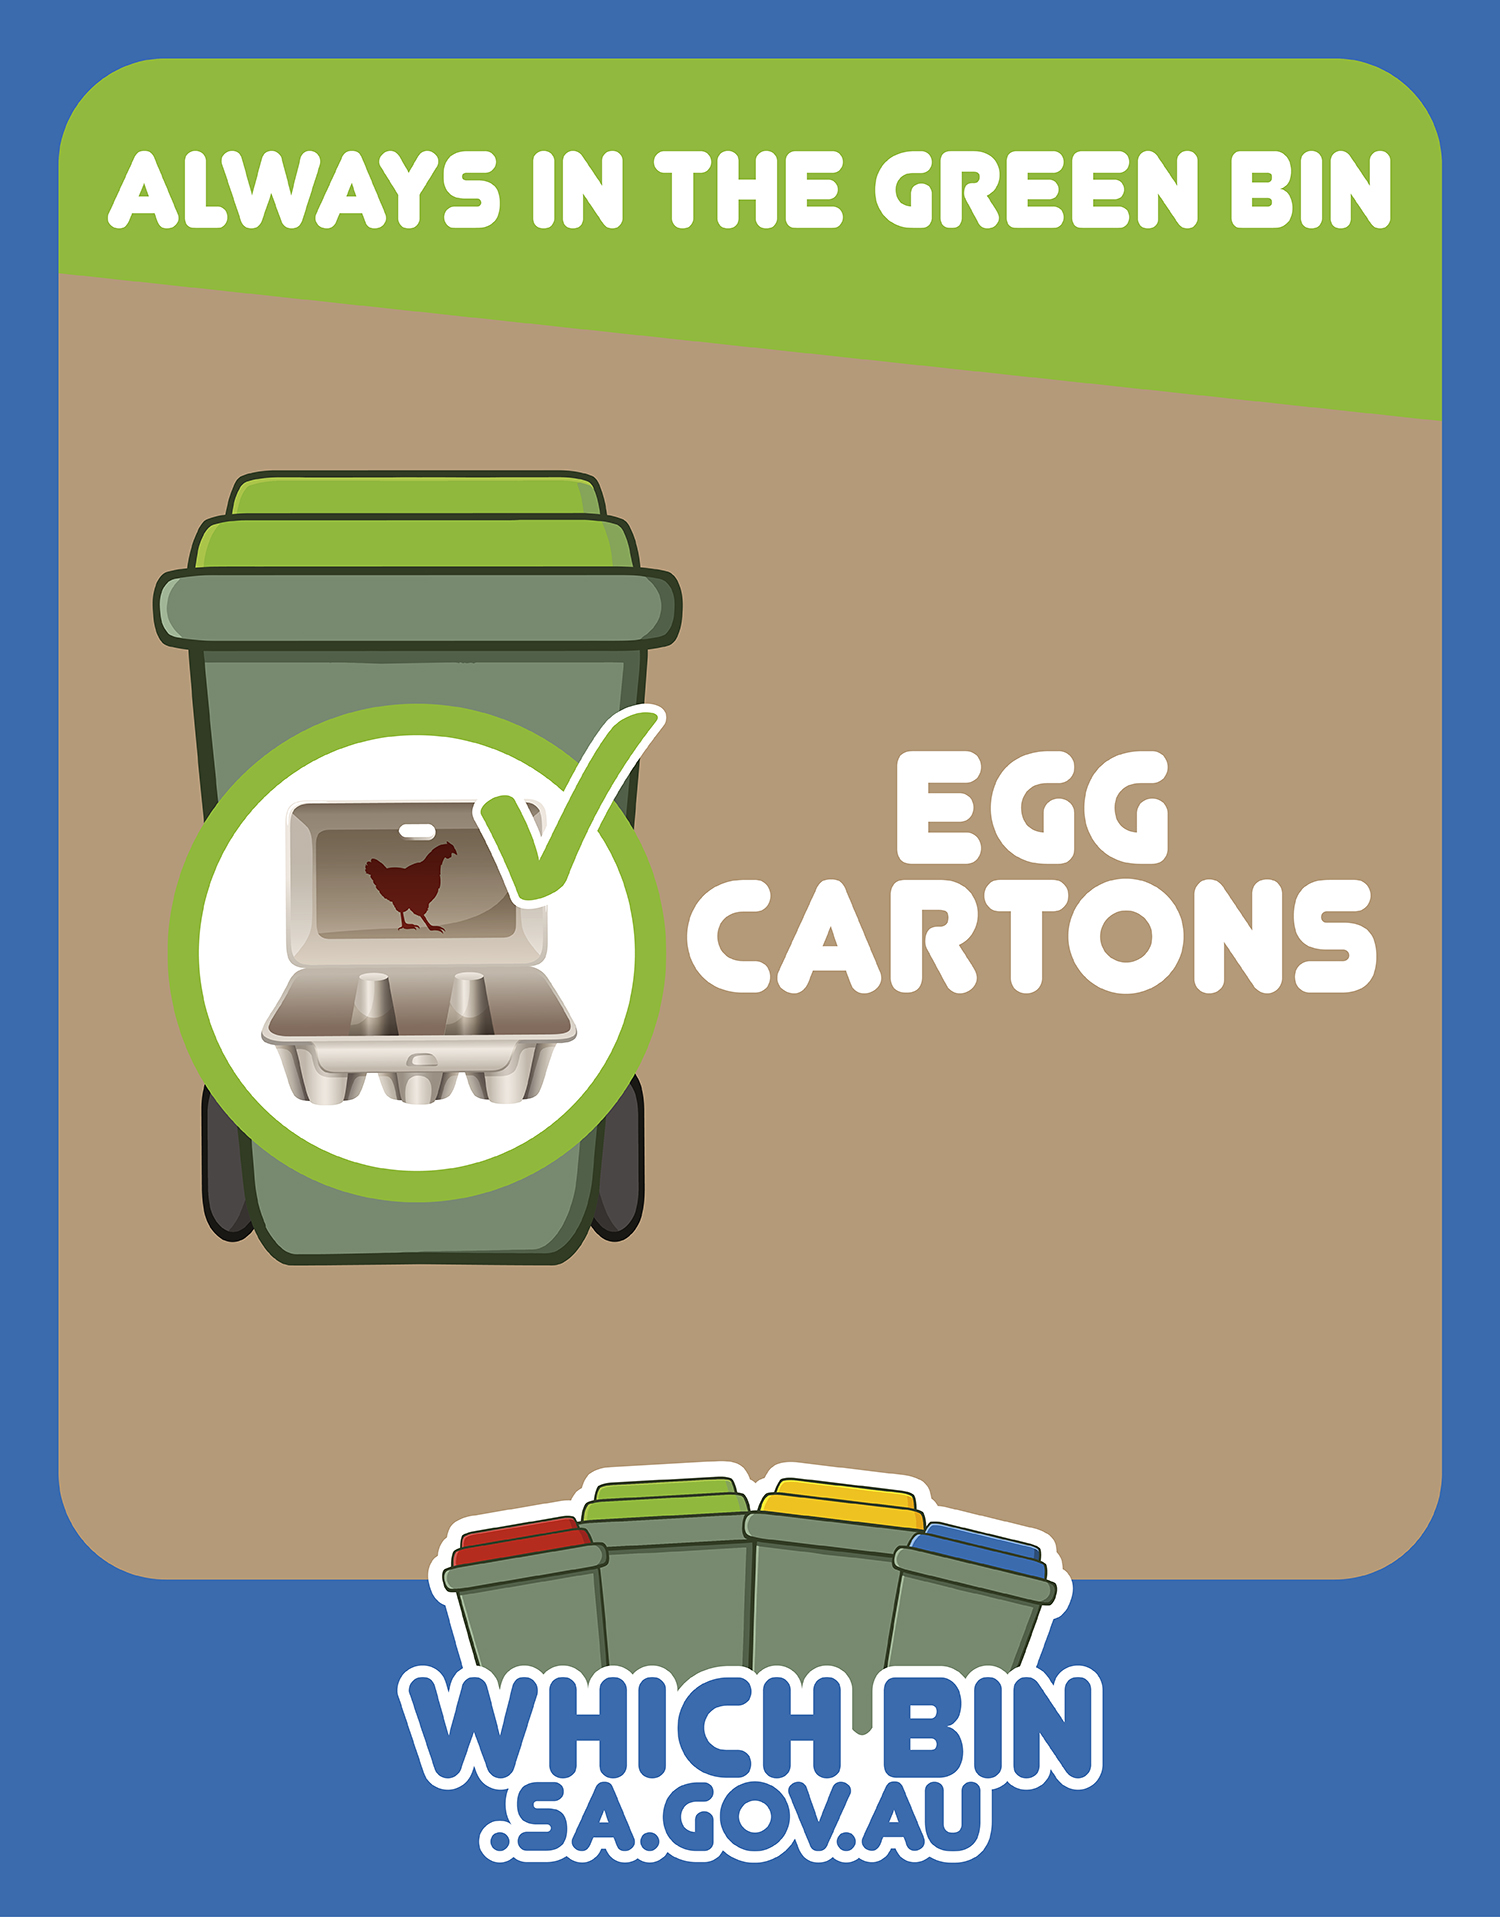 Always in the green bin: cardboard egg cartons 